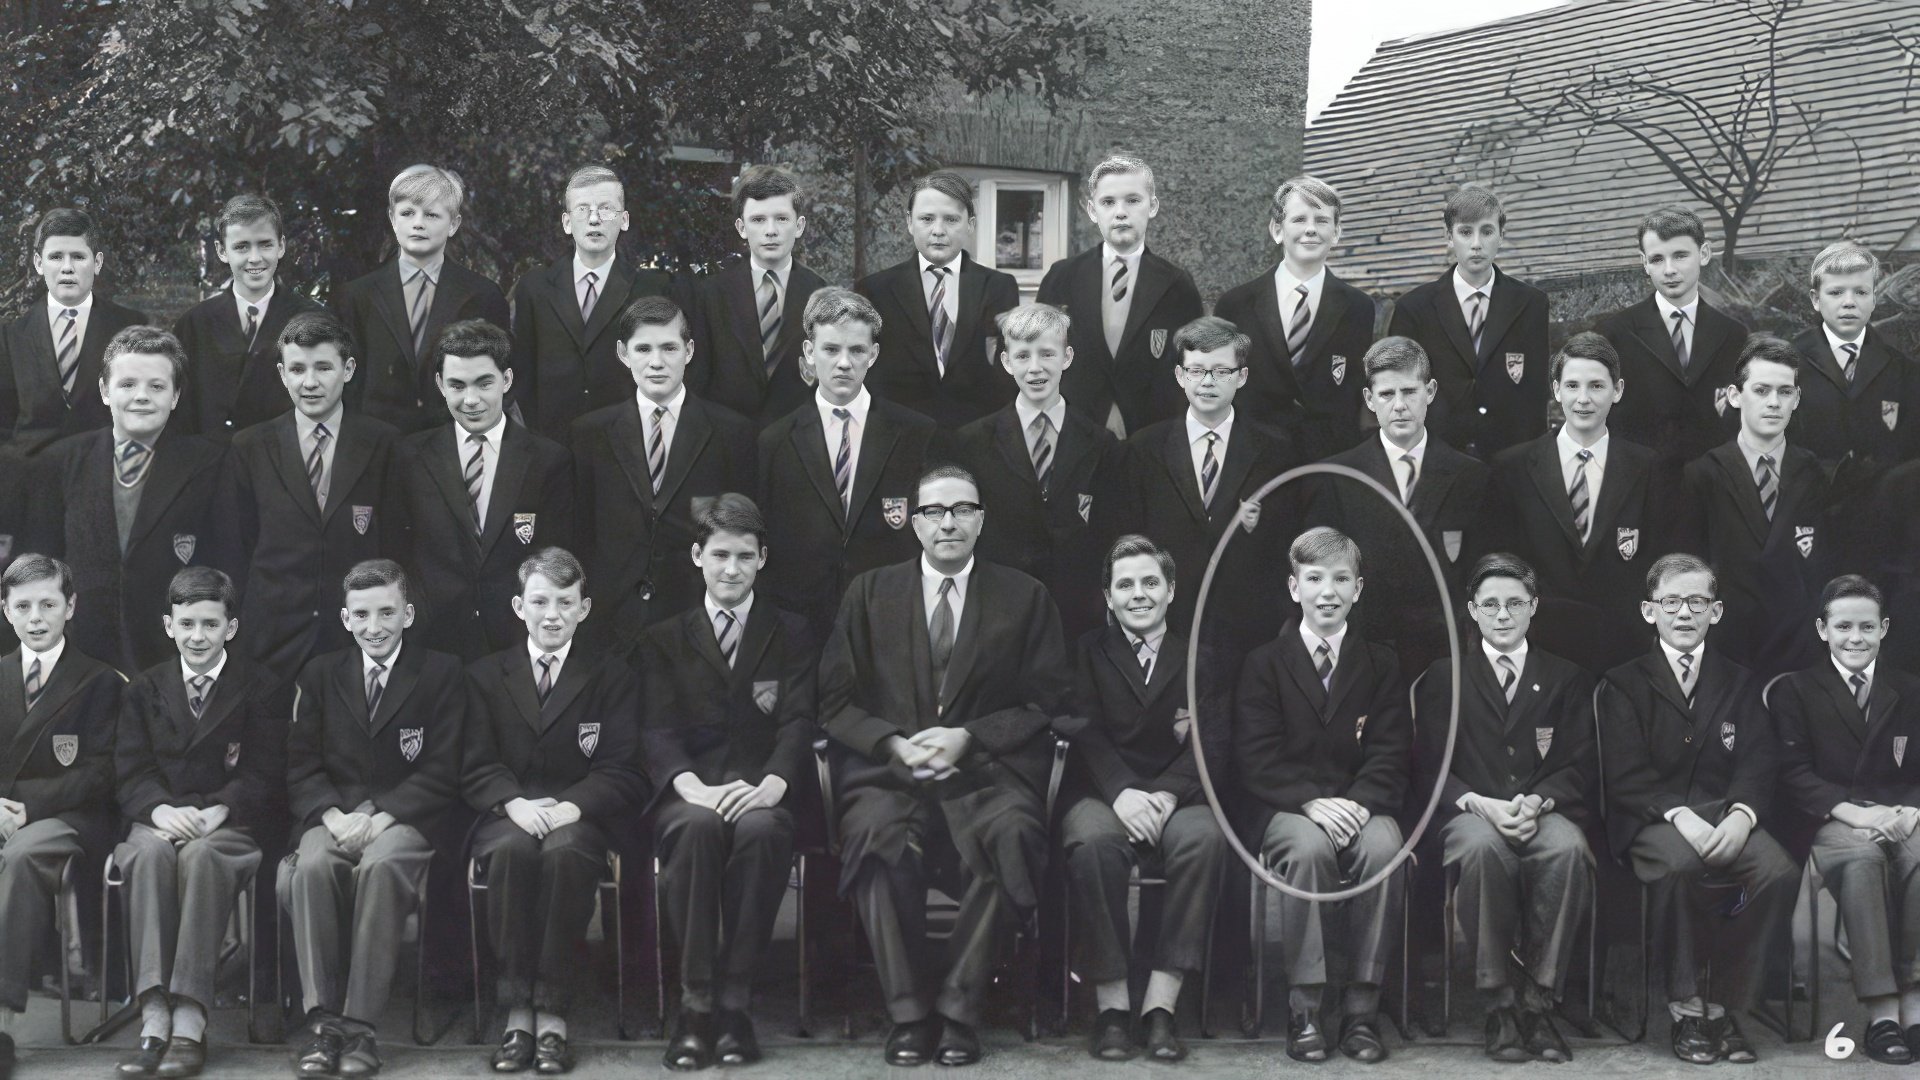 Alan Rickman in his school years